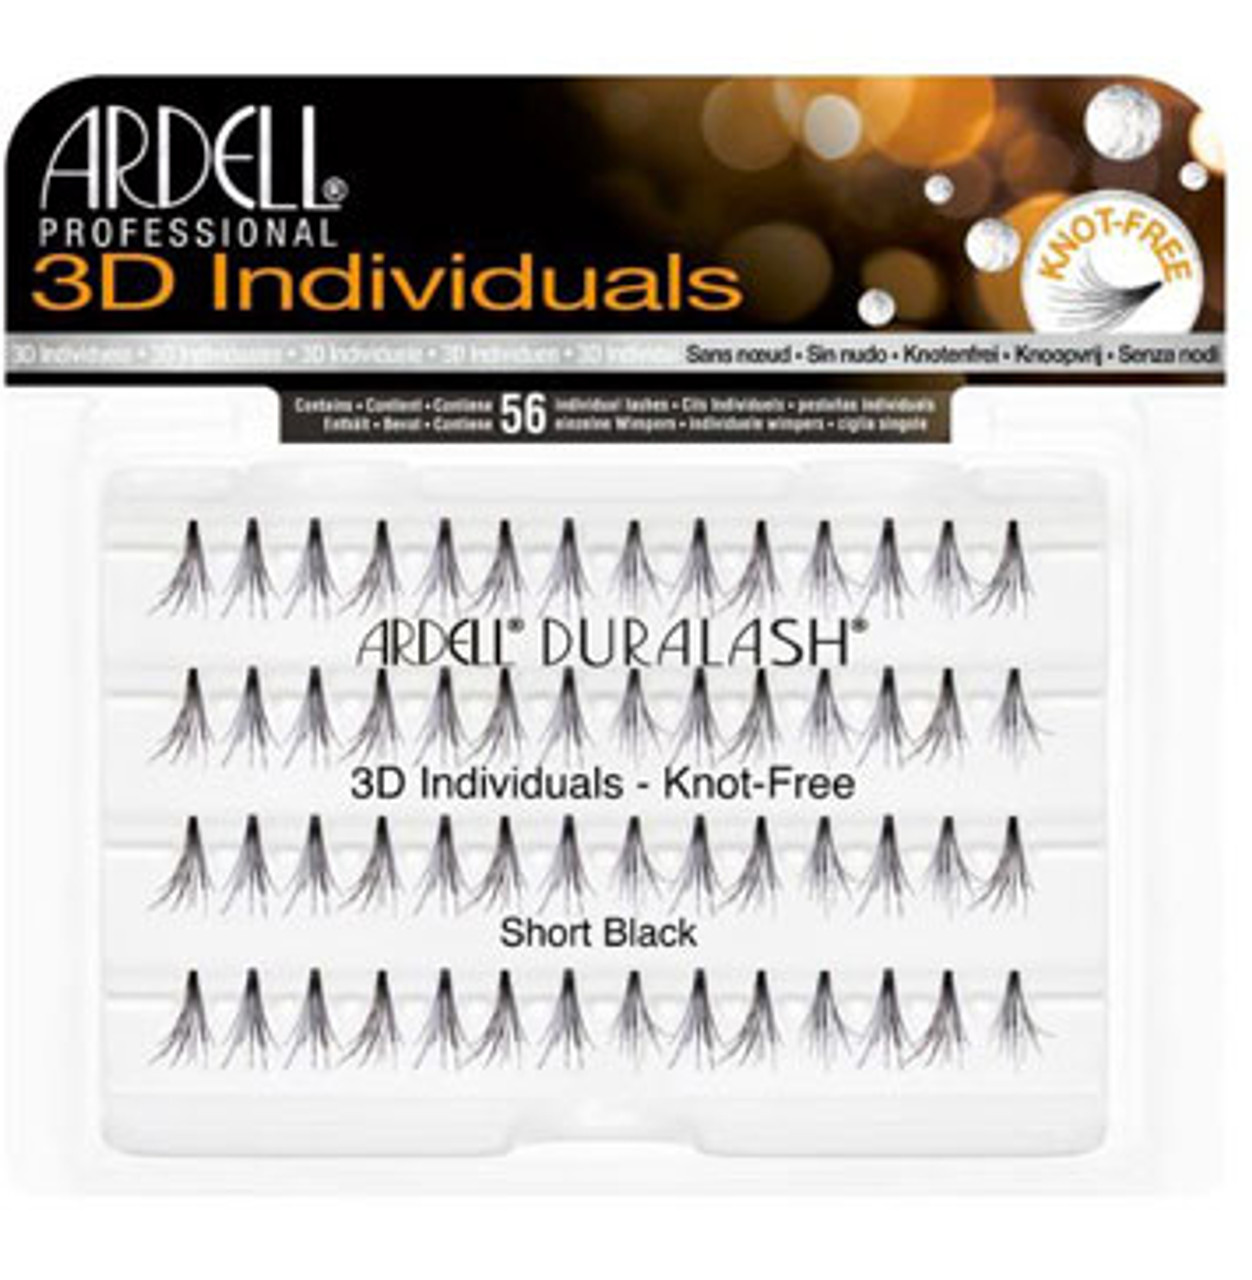 Ardell Duralash 3D Individuals - Short Black